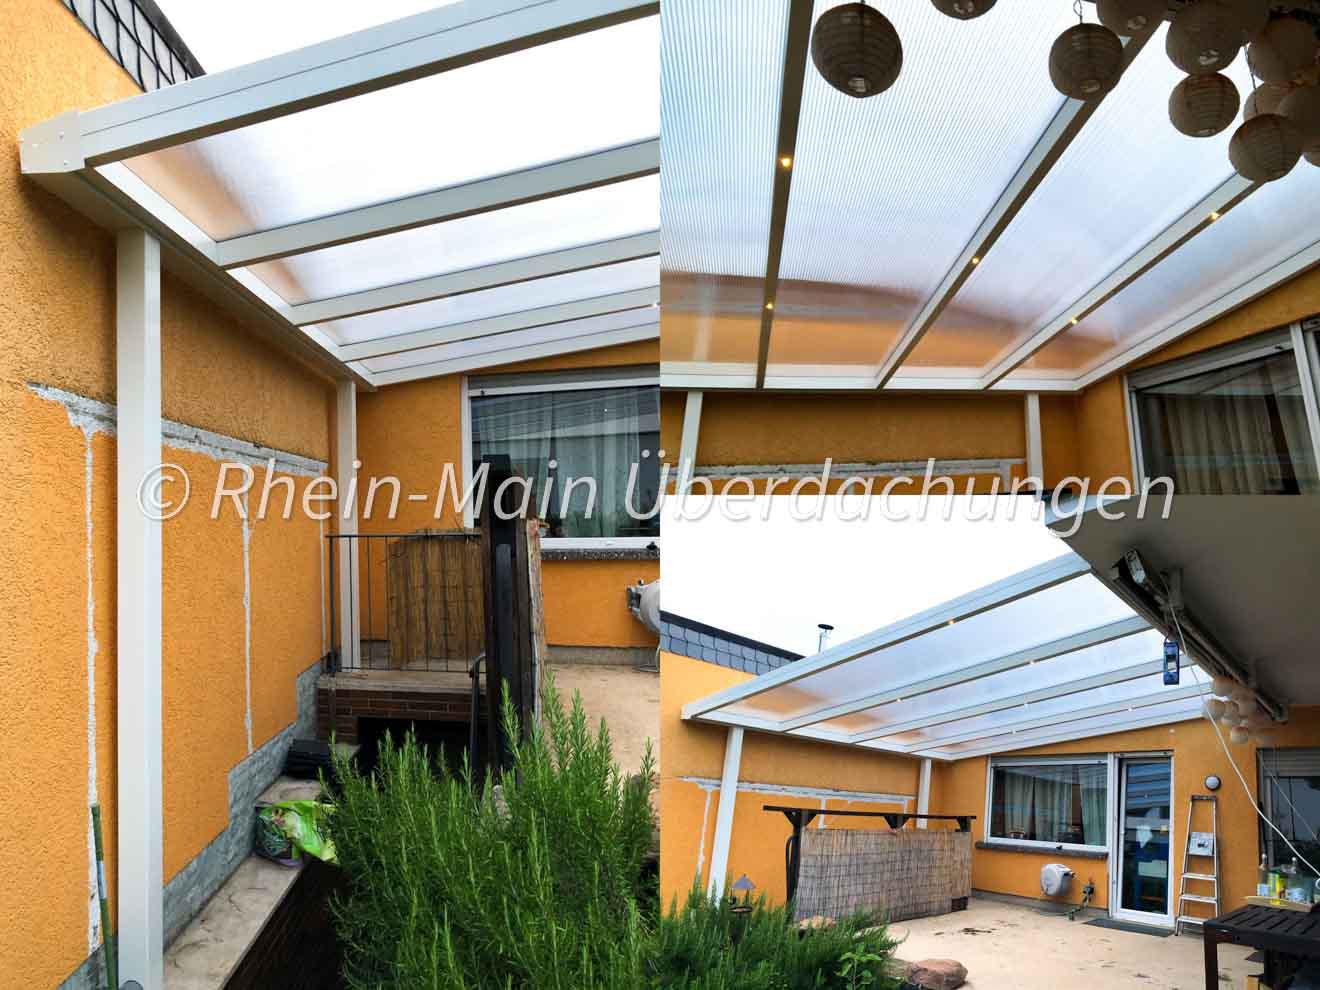 Polycarbonat Klar Terrassenüberdachung in 4x4.5m mit eingebauten LED Spots.